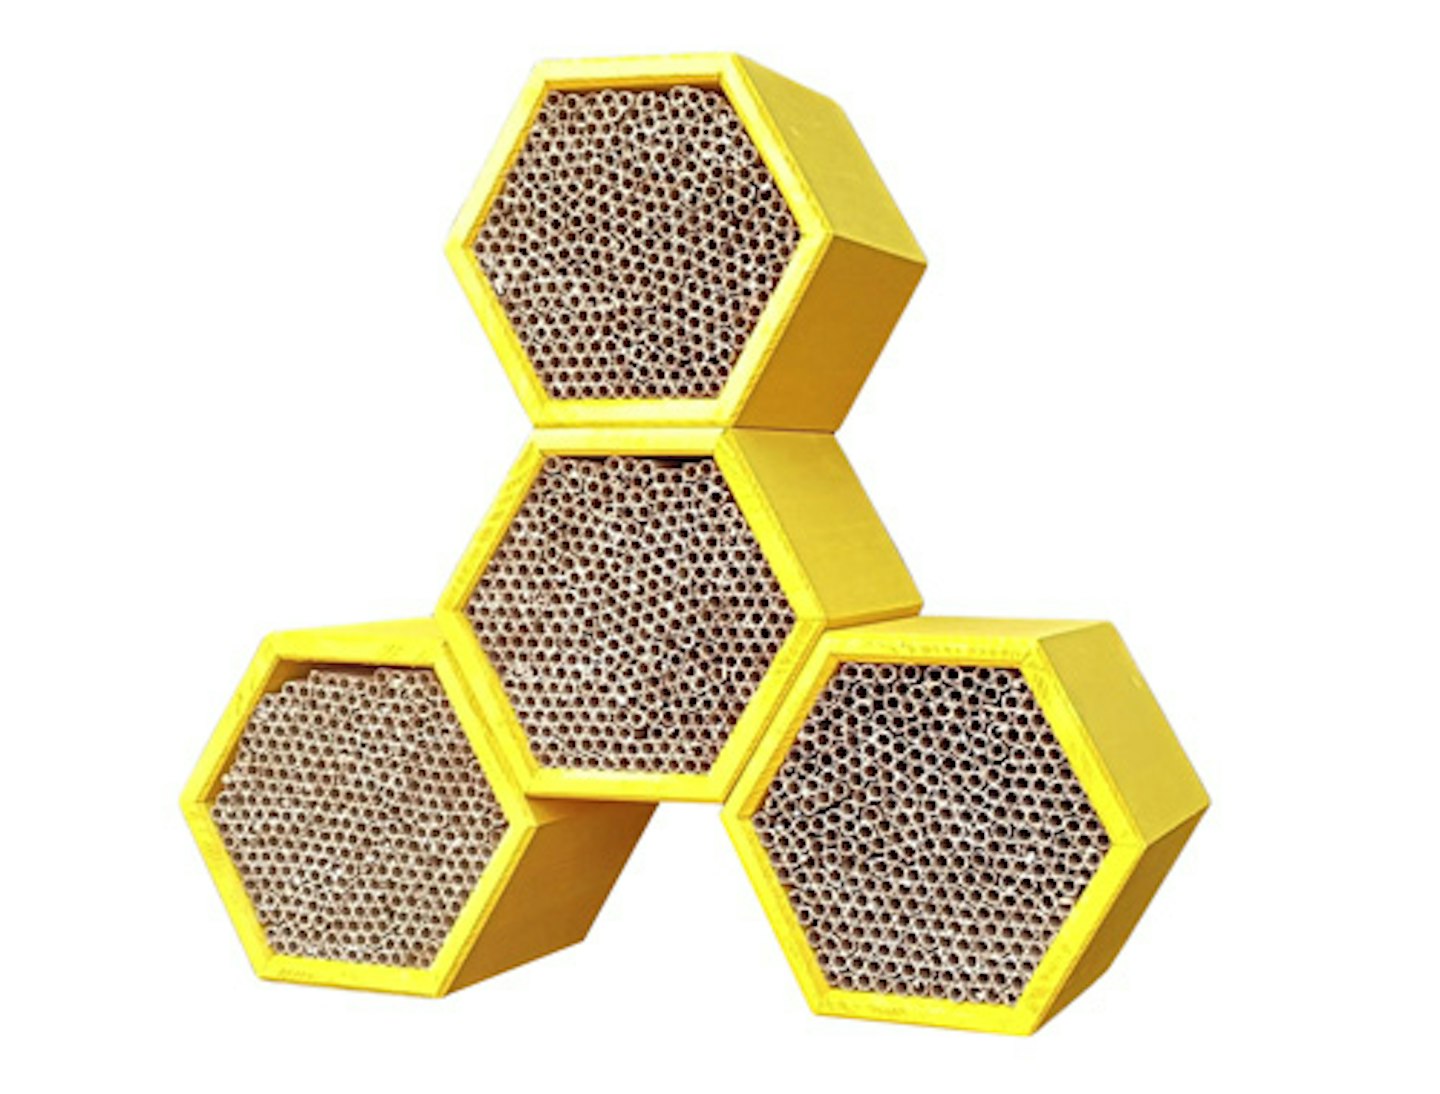 Modular Solitary Bee Houses